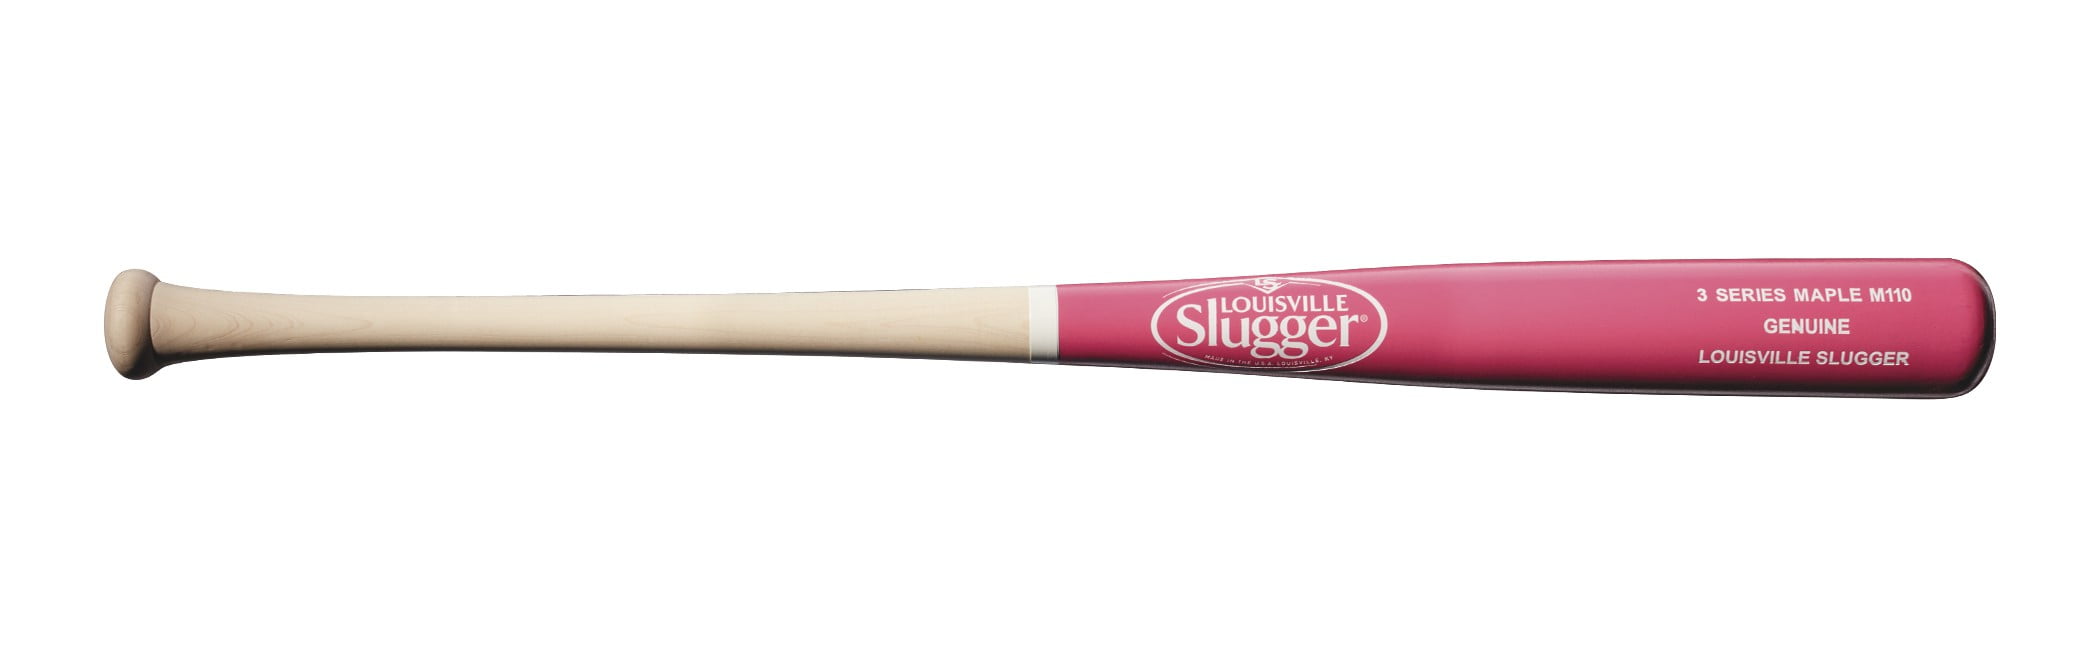 Louisville Slugger Genuine S3 Maple M110 Wood Bat, Natural/Pink